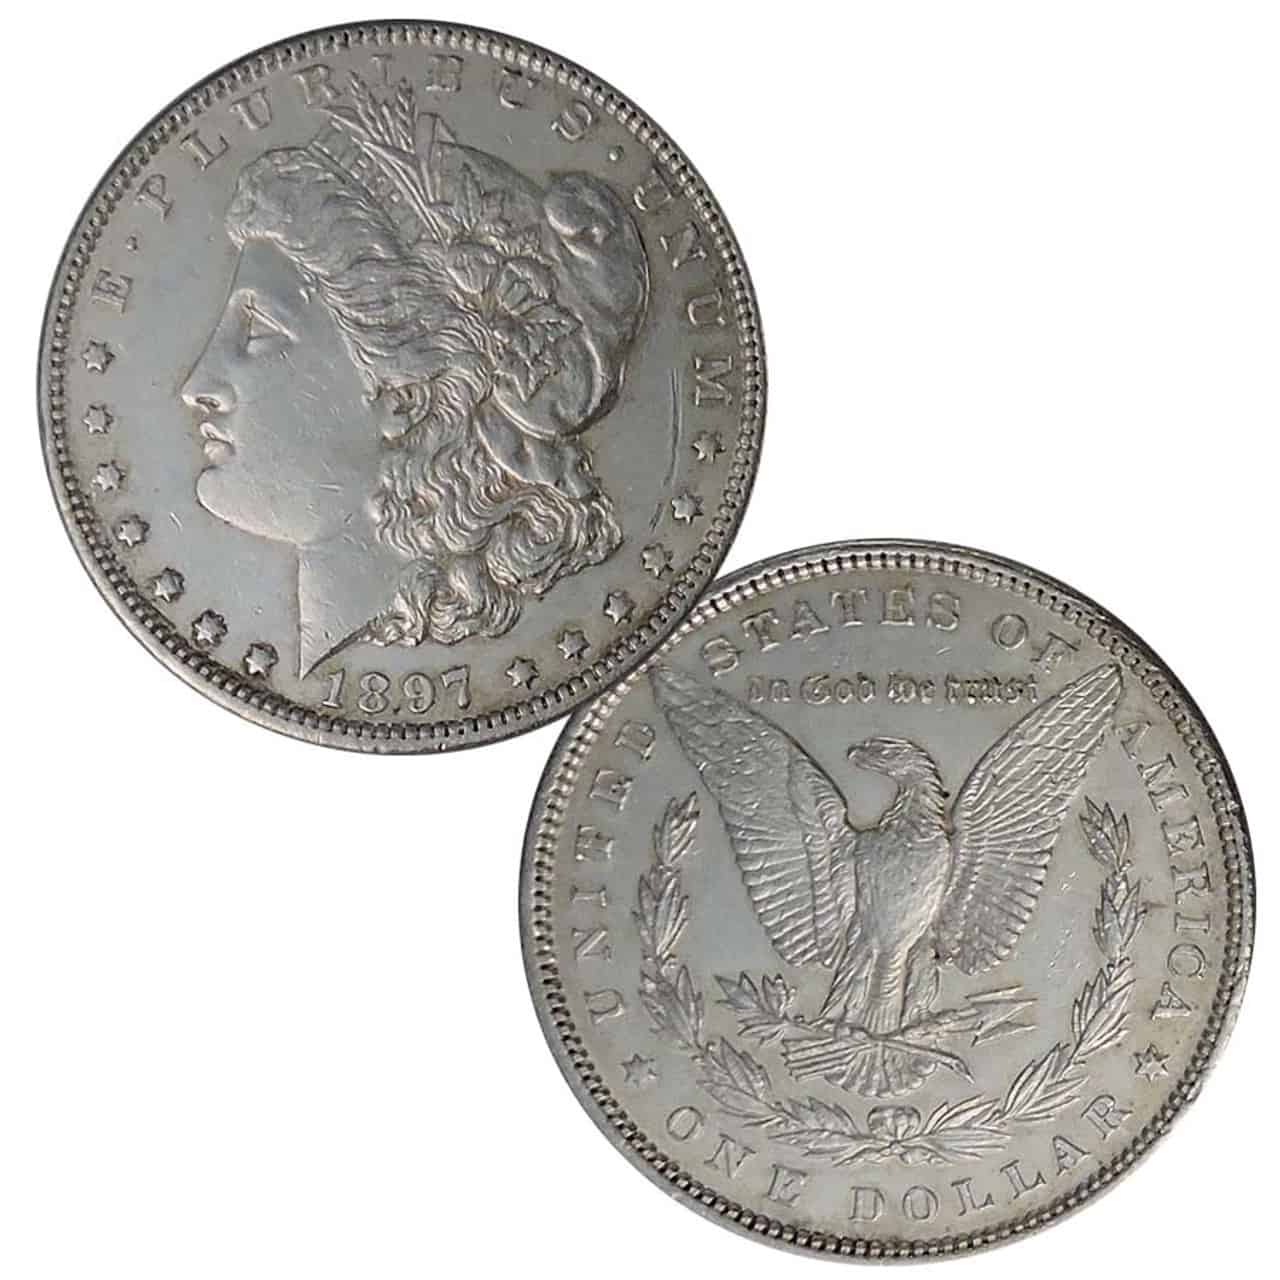 1897 No Mint mark silver Morgan dollar